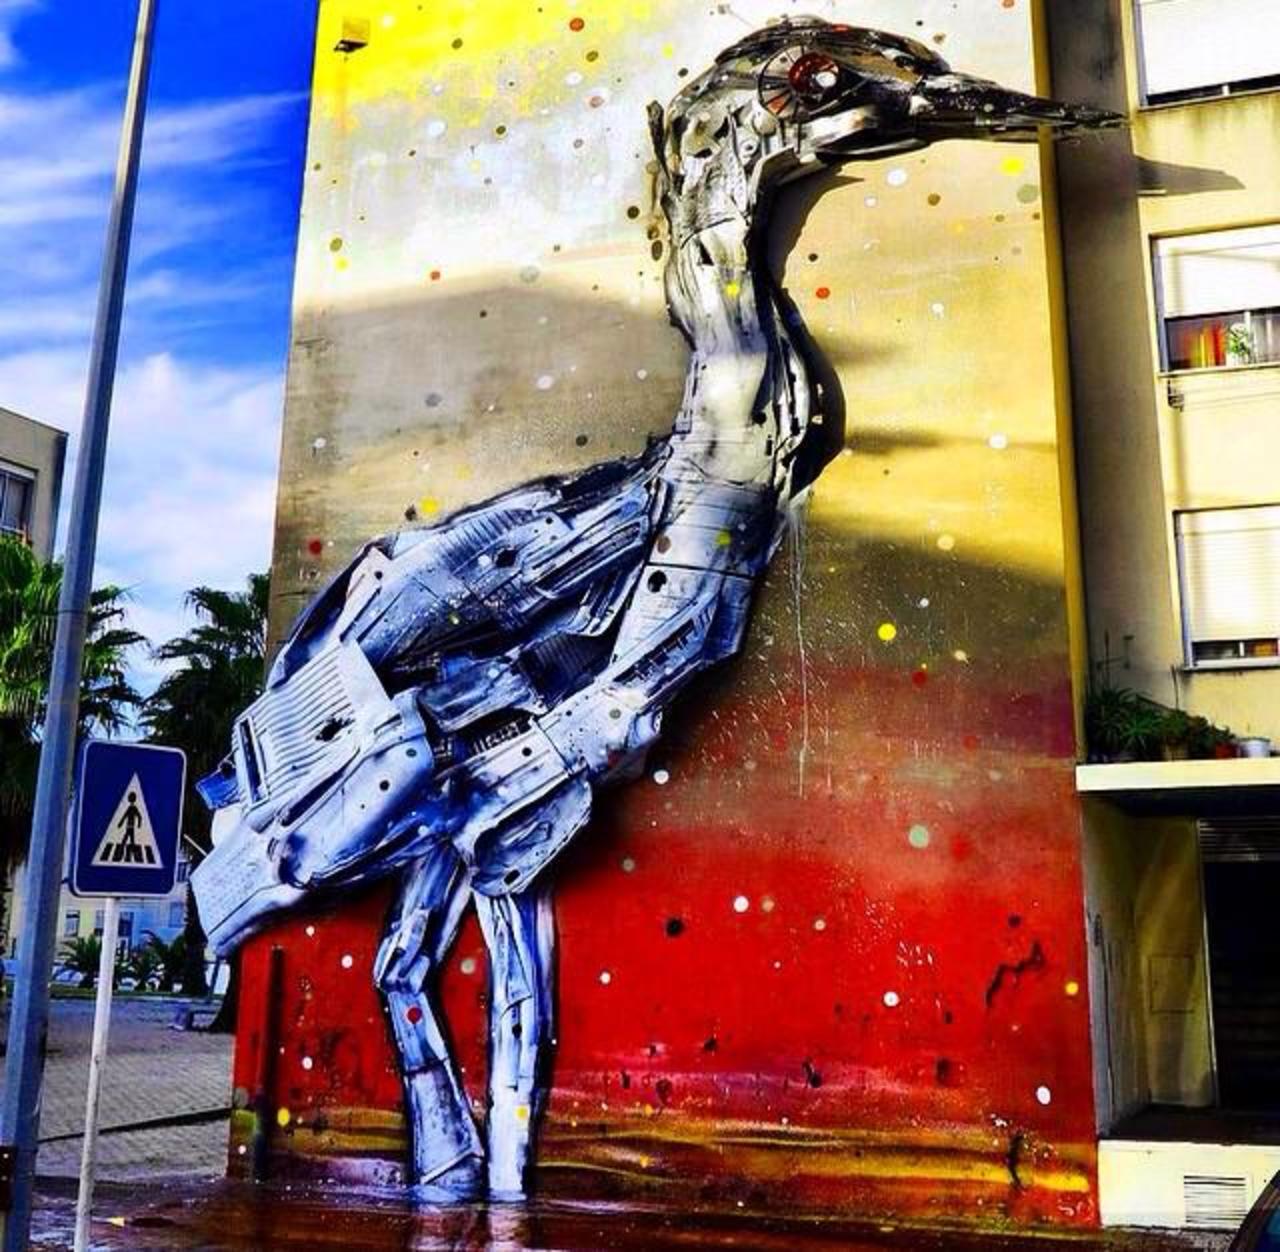 “@MookiePasMakake : 'Grey Heron' 
Bordalo II new Street Art installation in Loures, Portugal 

#art #streetart http://t.co/Uy7o5k9O64”